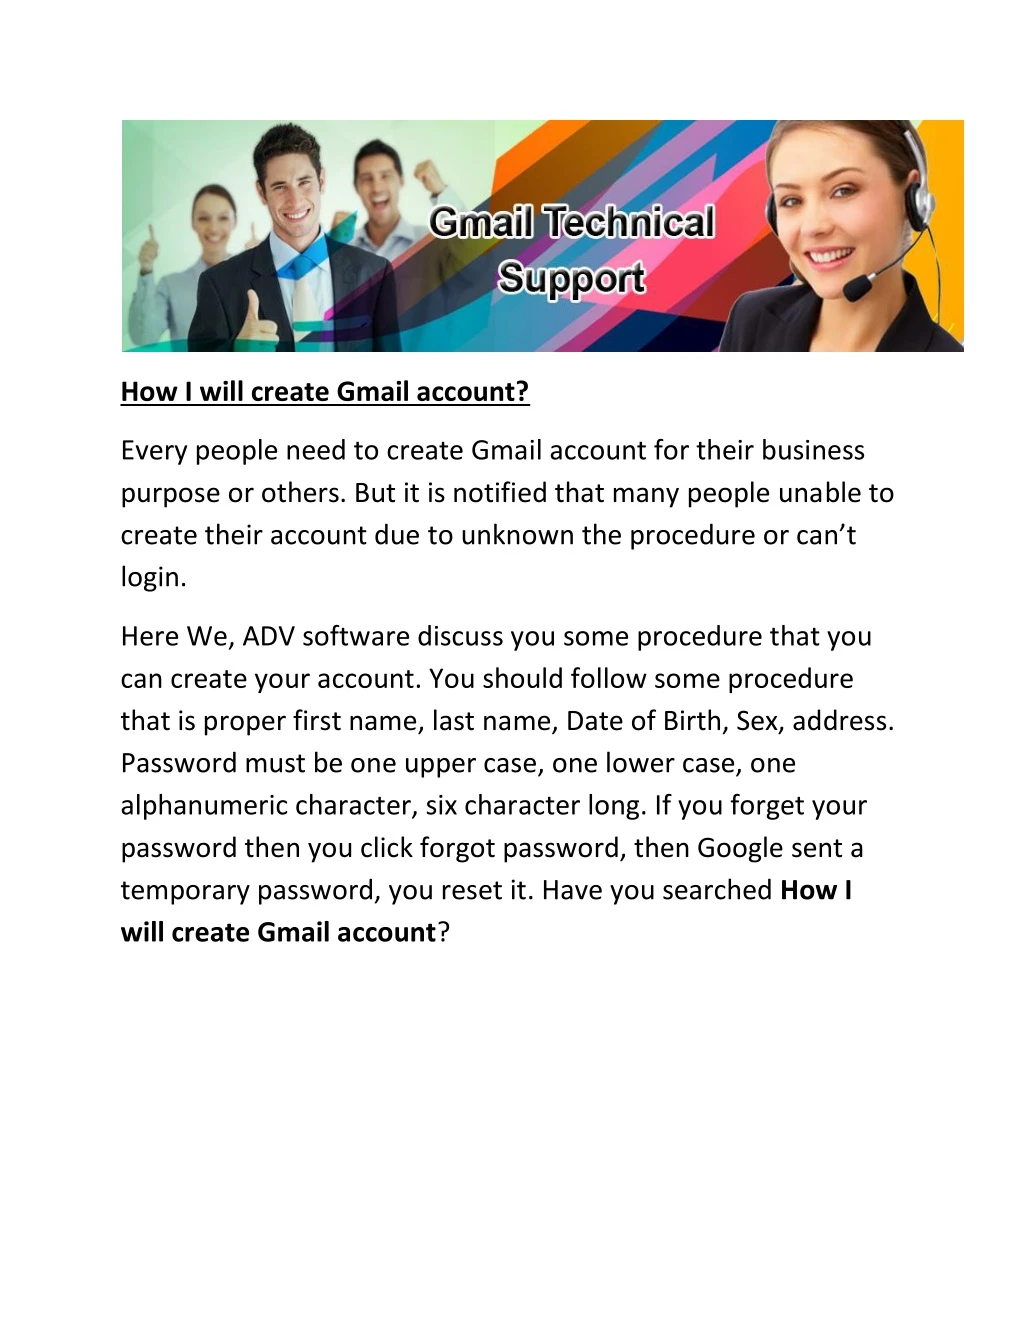 how i will create gmail account